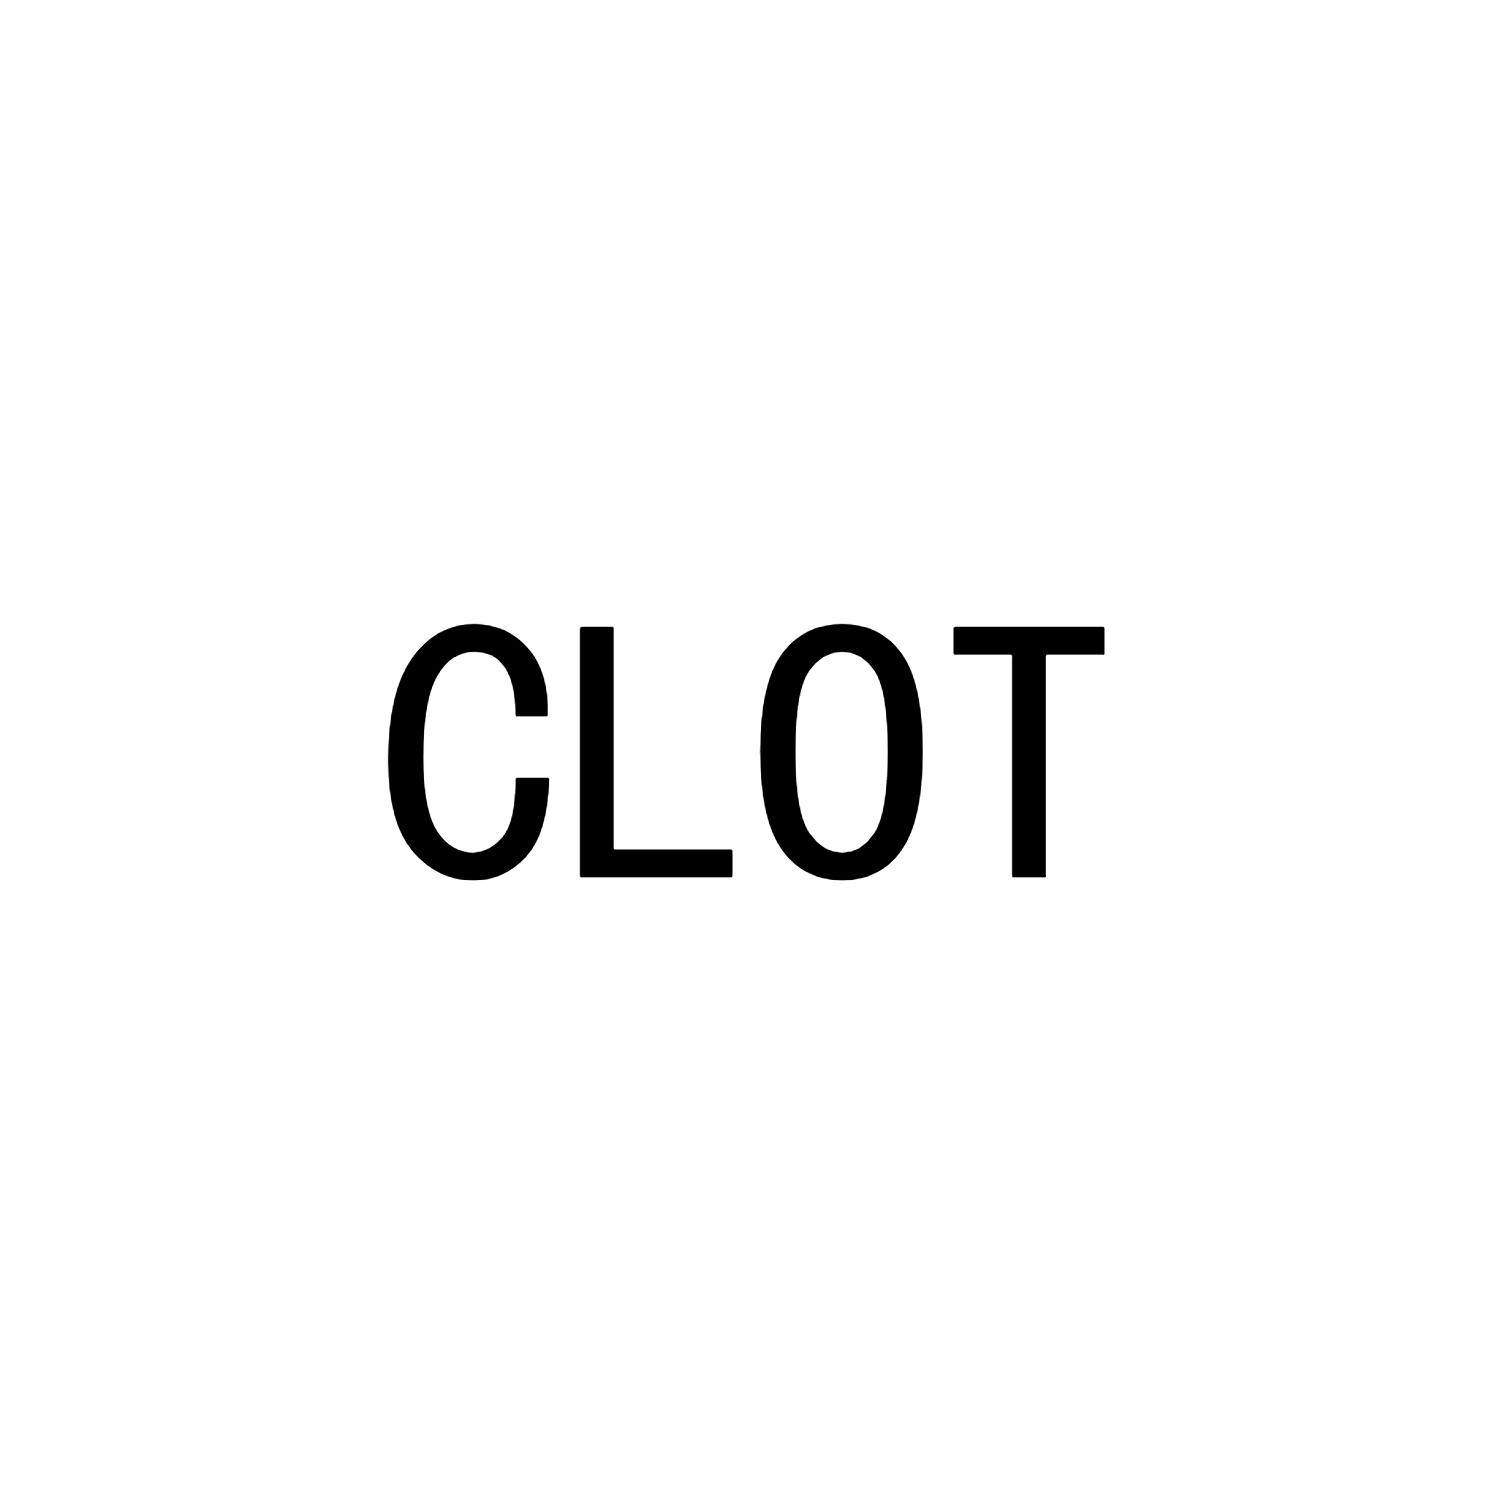 clot标志的含义图片